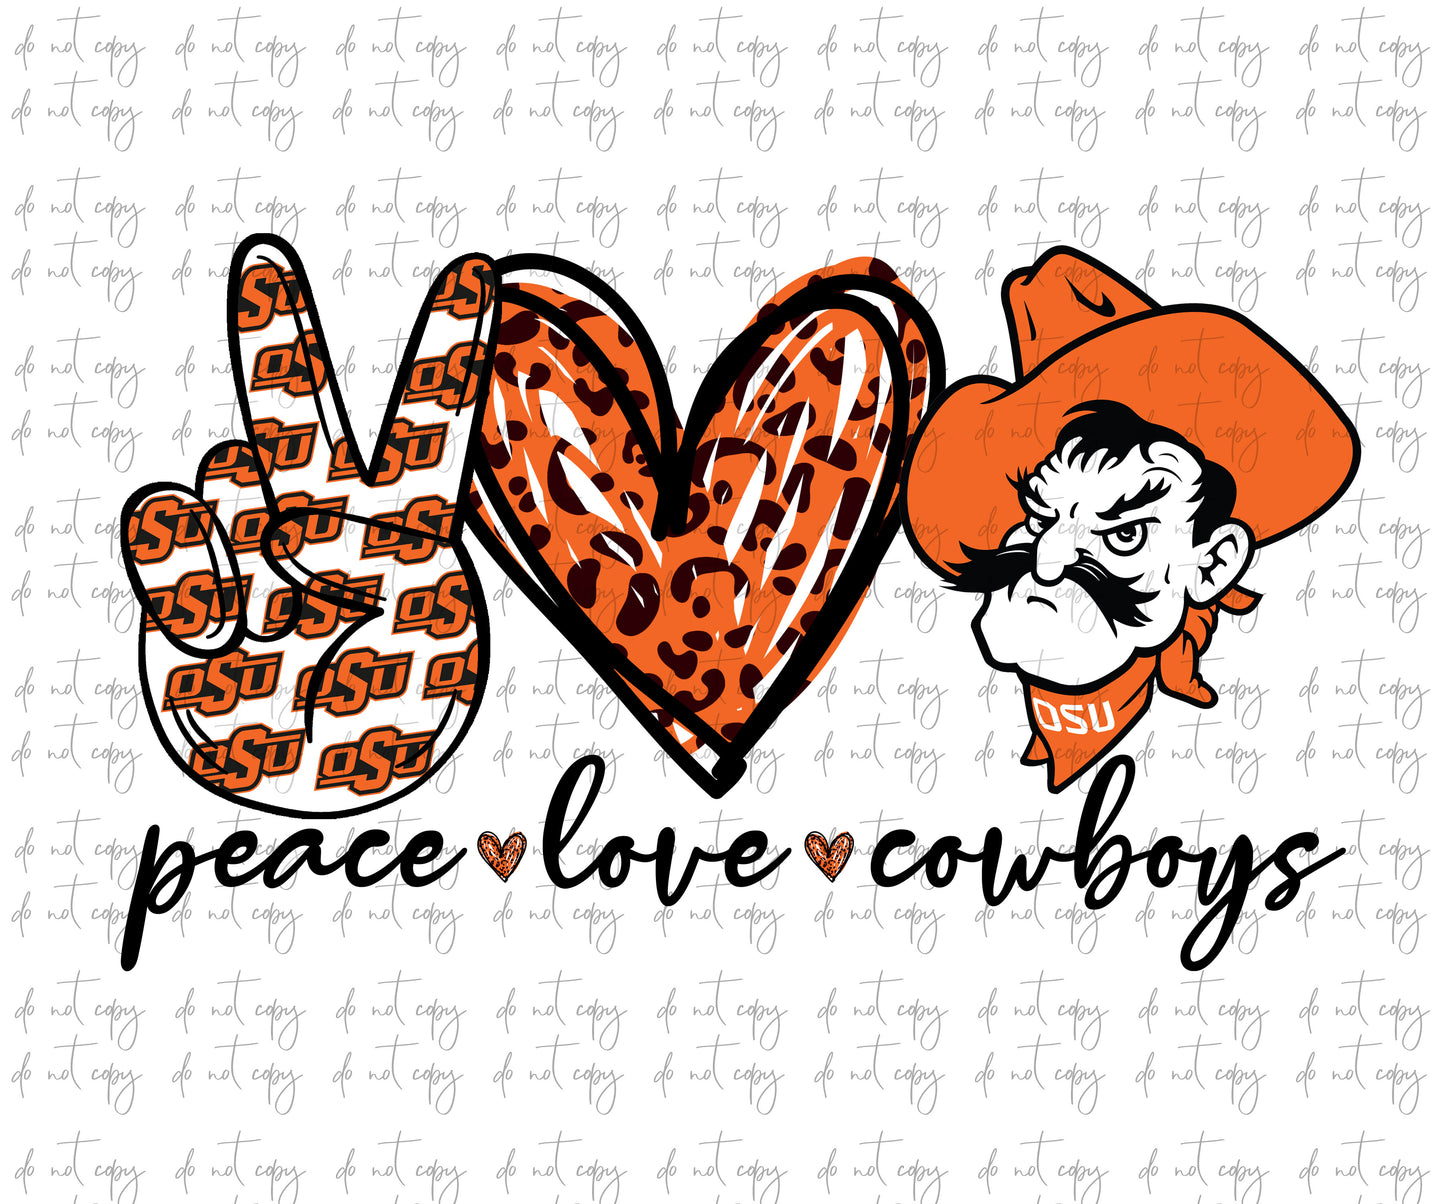 Peace love cowboys oklahoma